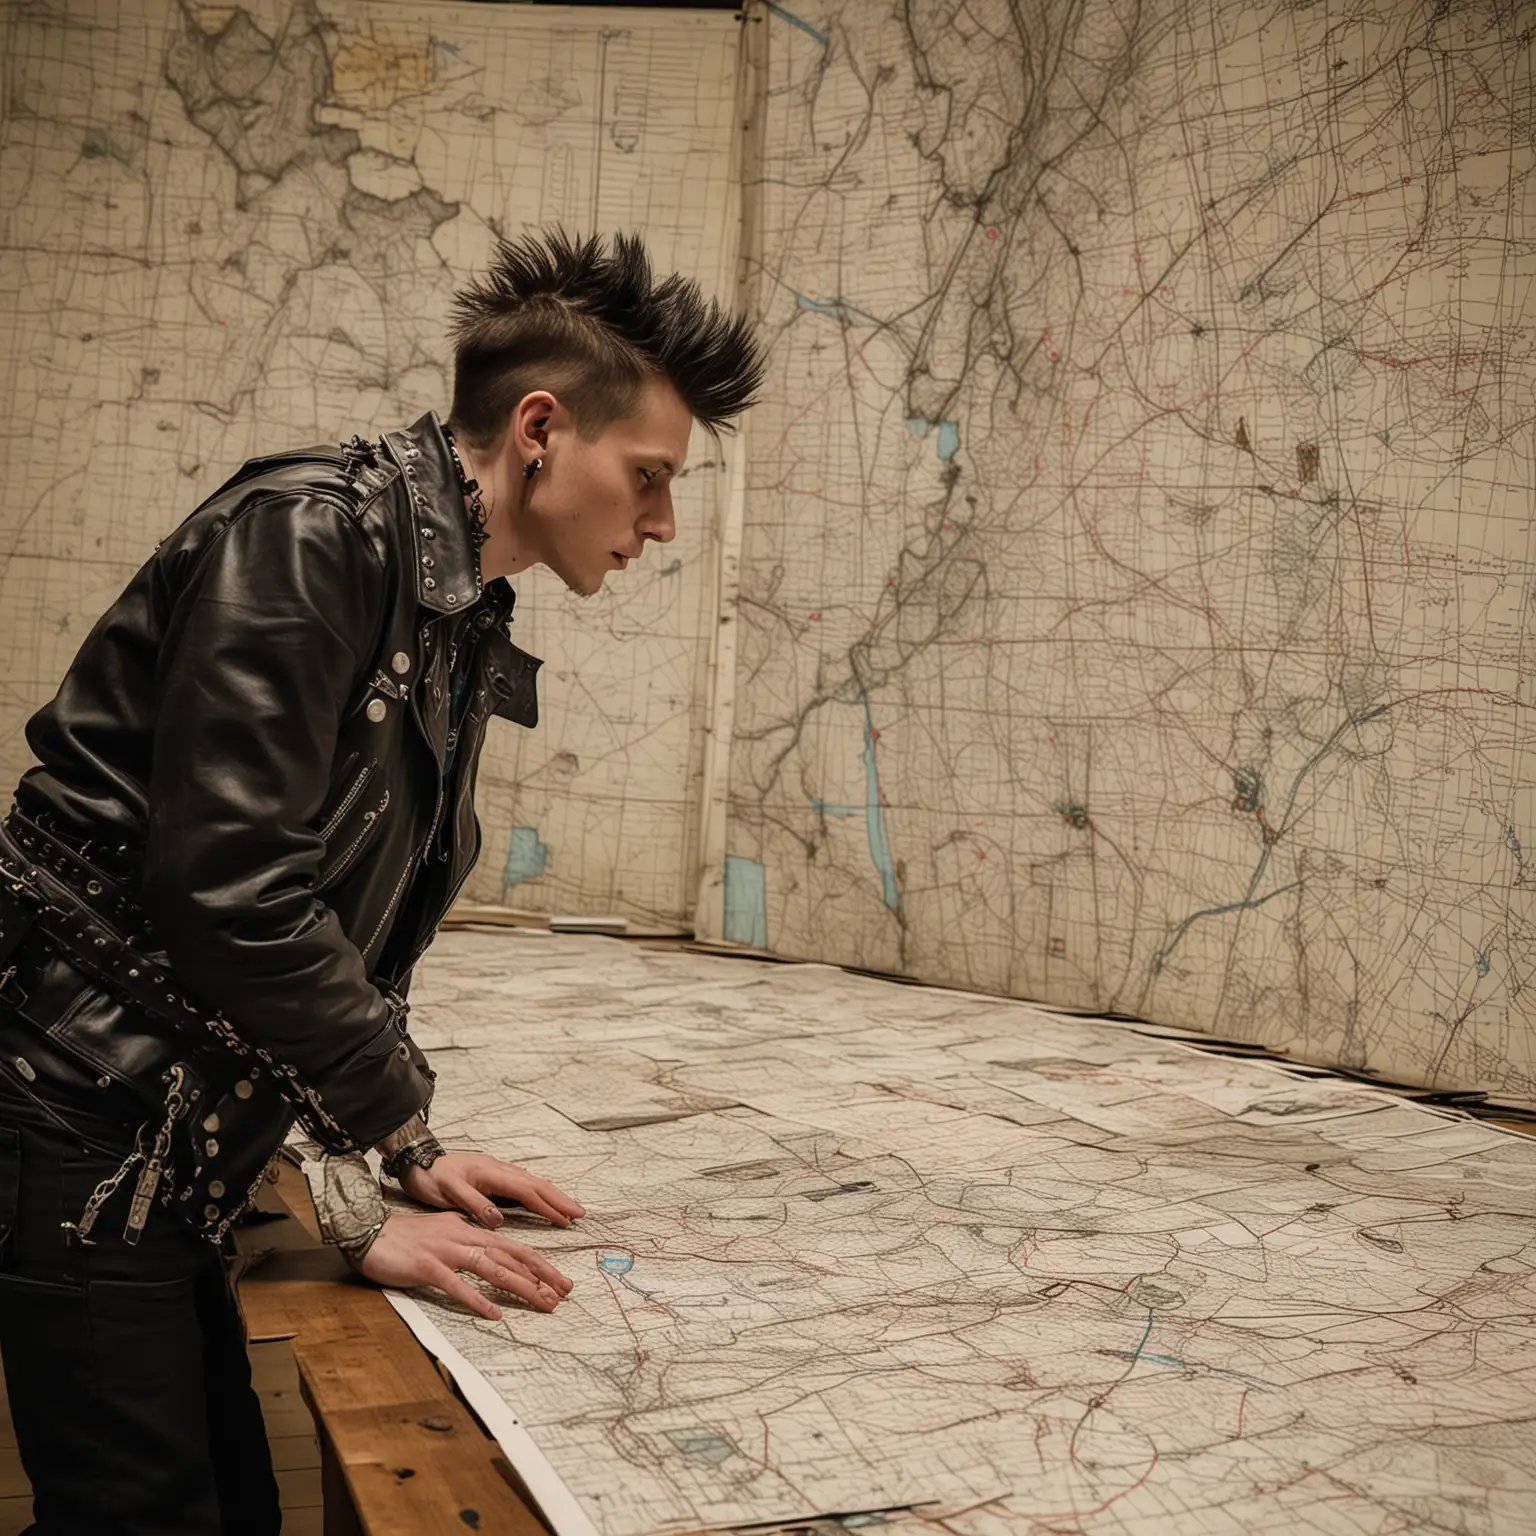 Punk Cartographer Examining Detailed Maps on Large Table